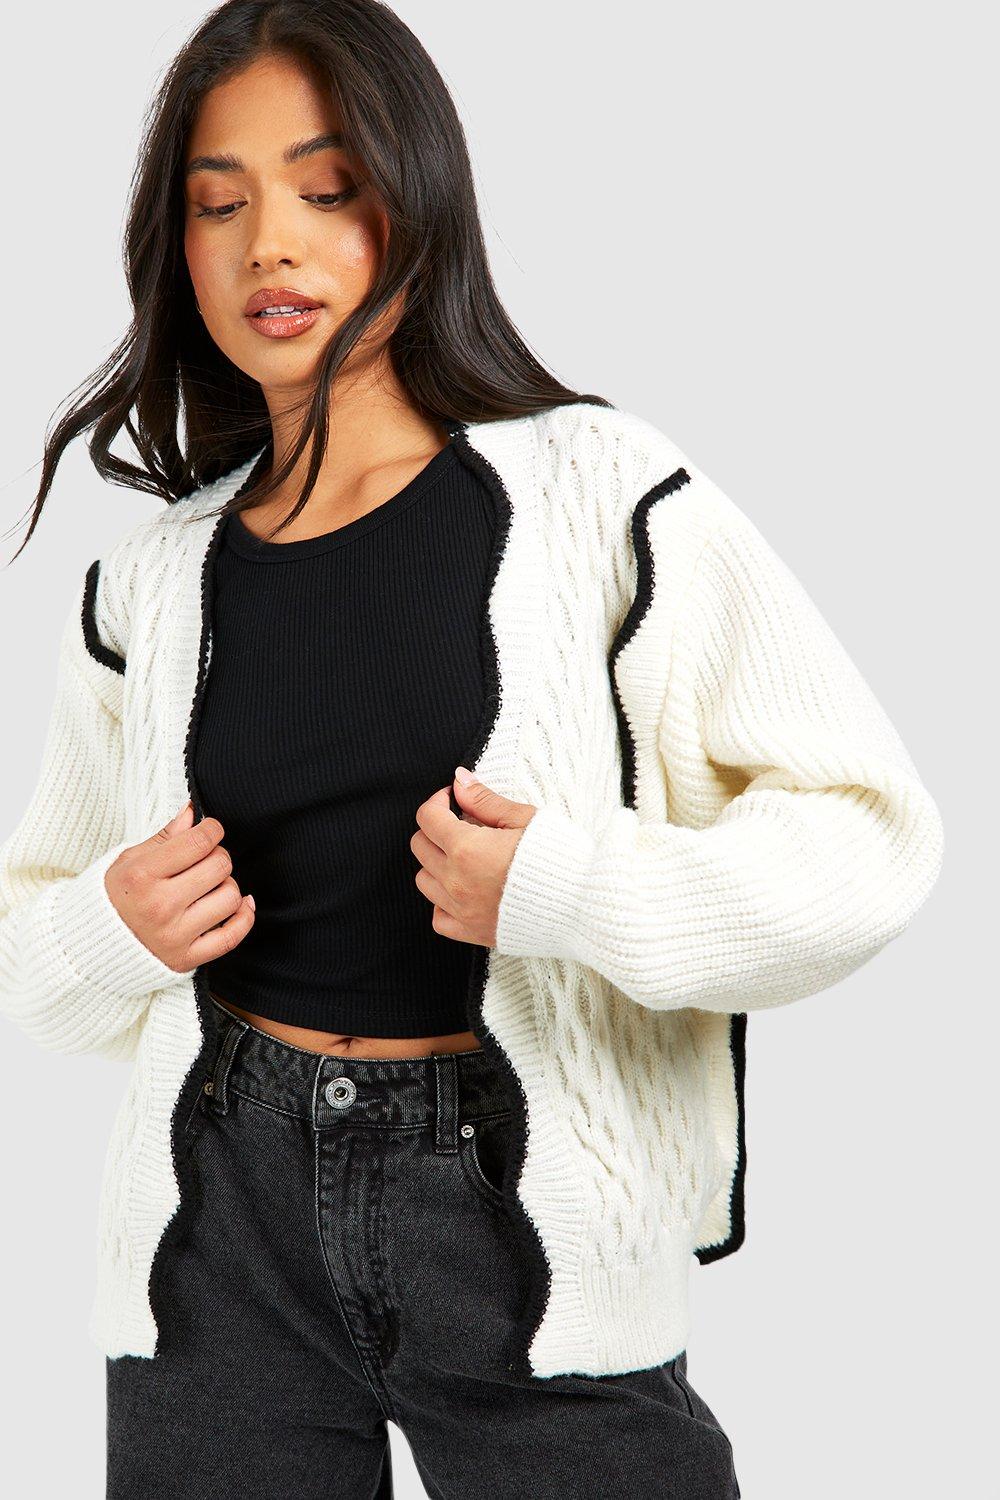 Stylist scalloped border for ladies cardigan sweater